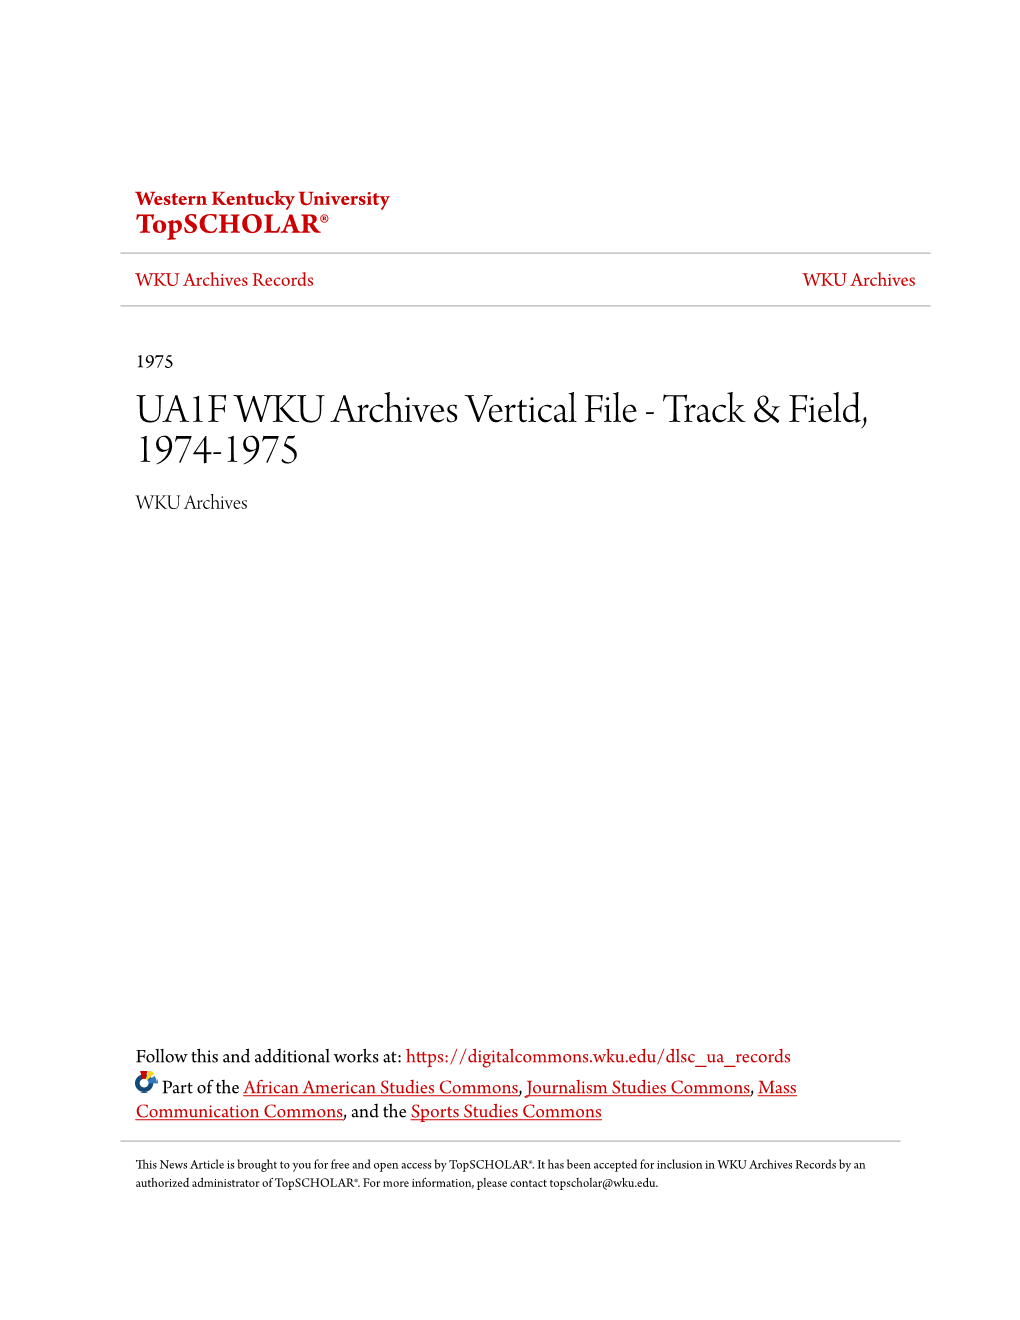 UA1F WKU Archives Vertical File - Track & Field, 1974-1975 WKU Archives